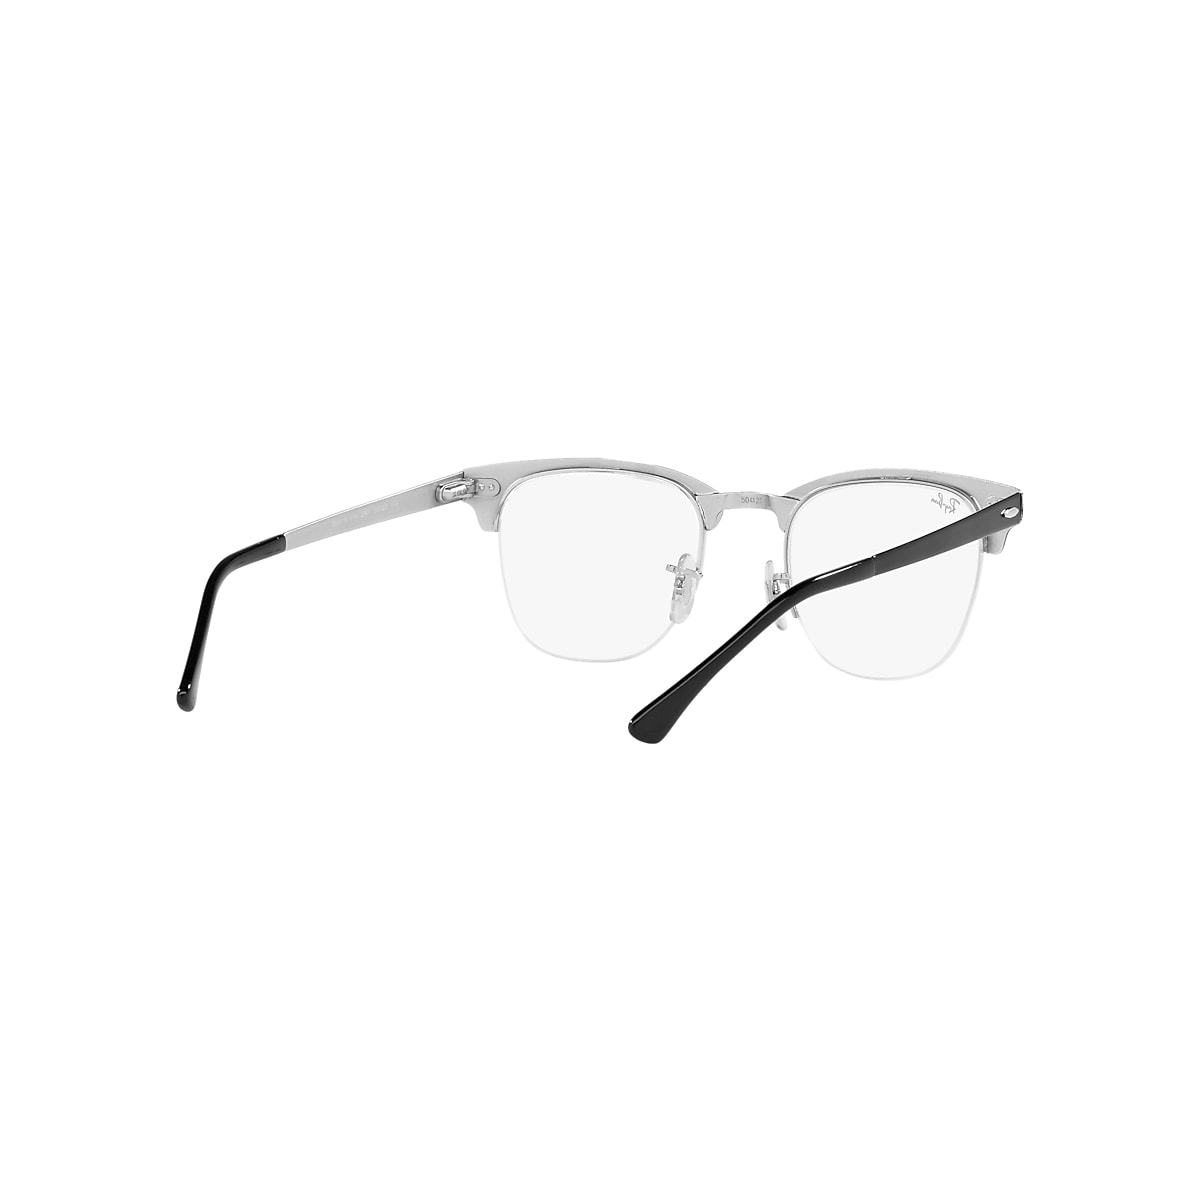 CLUBMASTER METAL OPTICS Eyeglasses with Black On Silver Frame